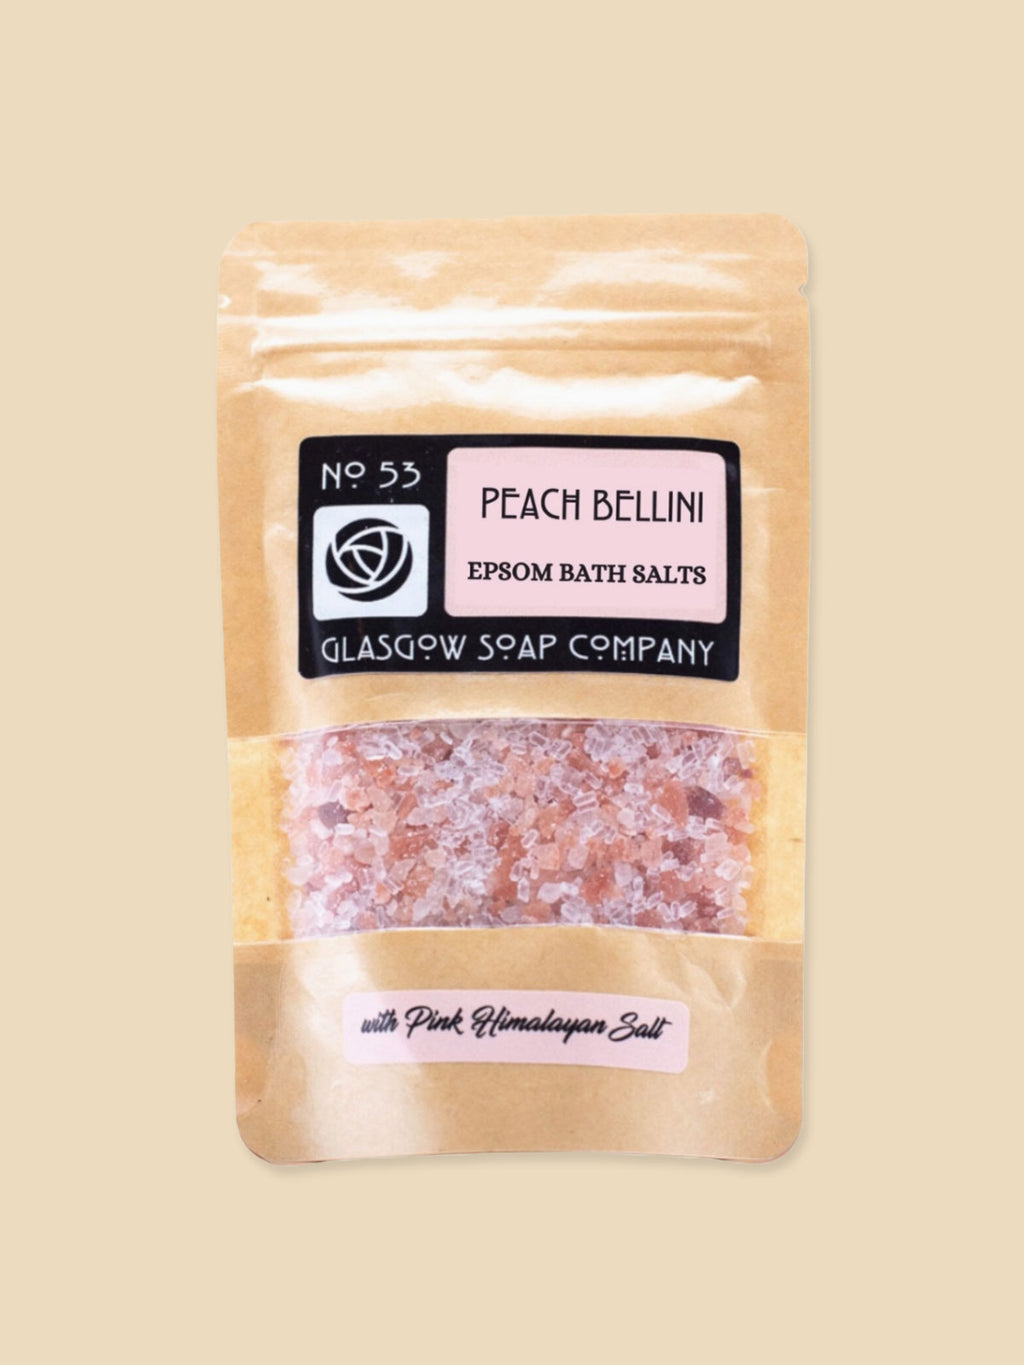 Glasgow Soap Company - Bath Salts - Peach Bellini